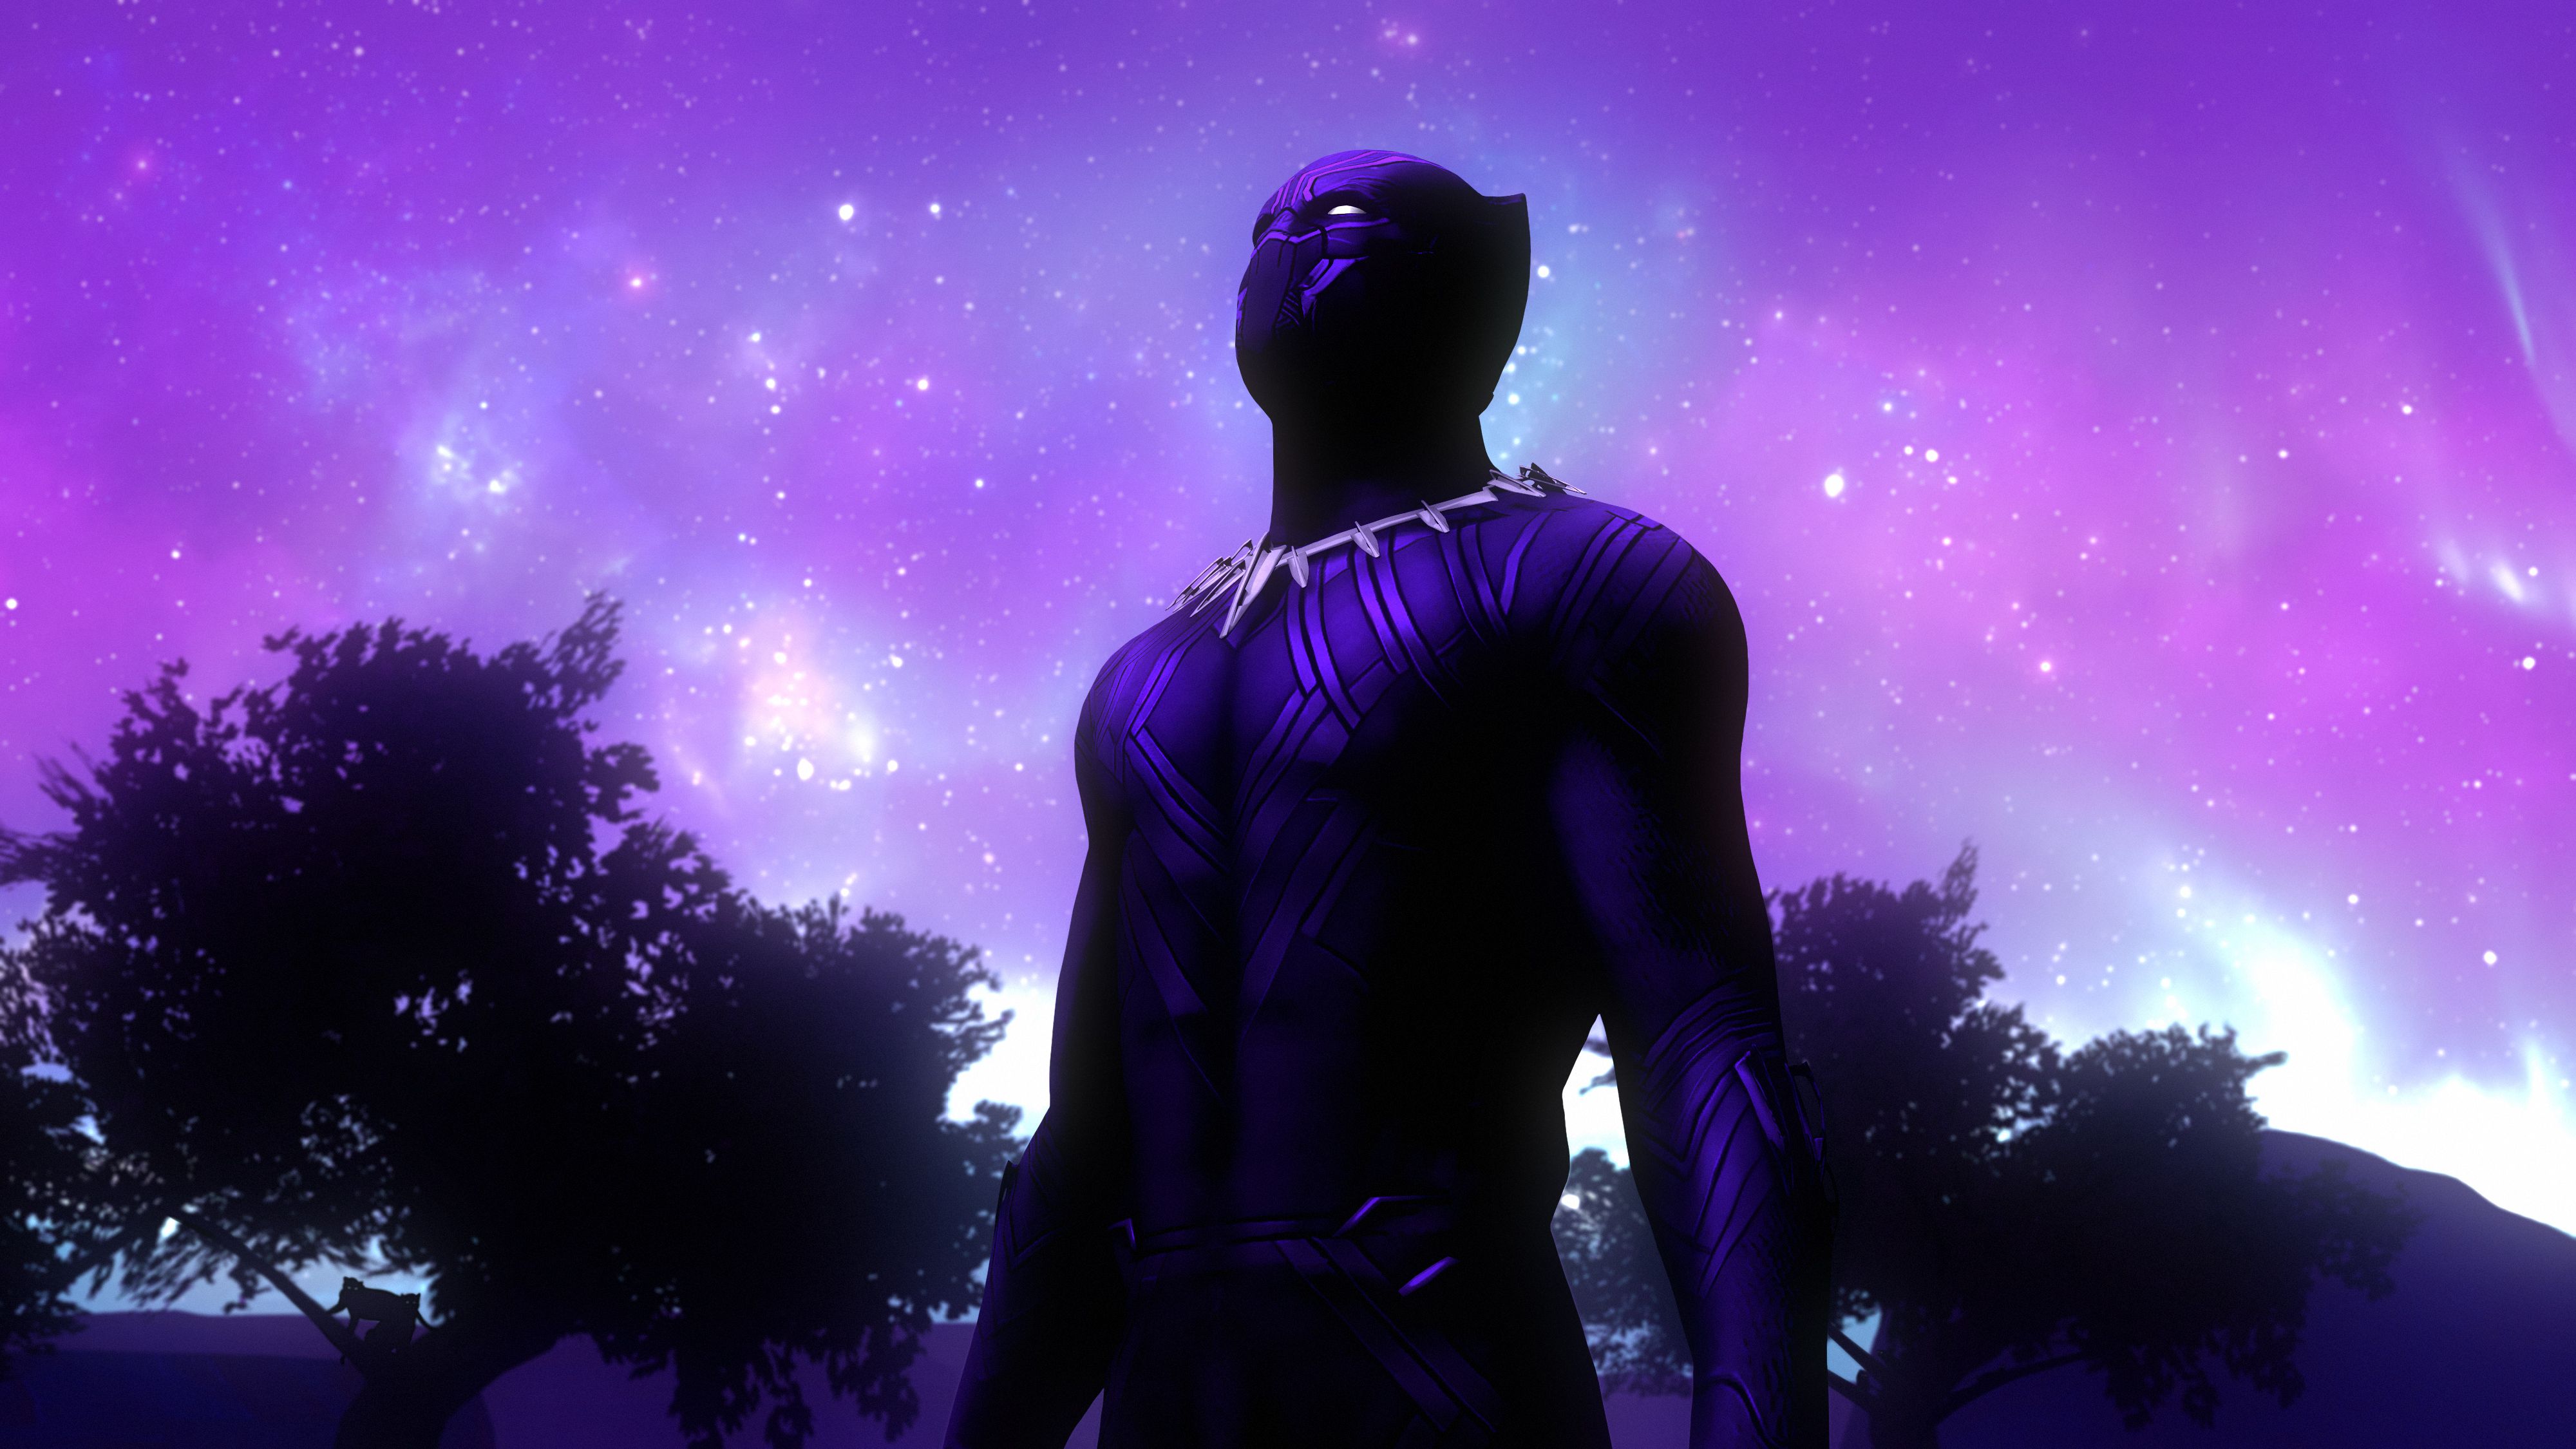 Black Panther 4K Wallpaper, Marvel Comics, Purple Sky, Outer Space, Stars, Sci Fi, Superheroes, Fantasy